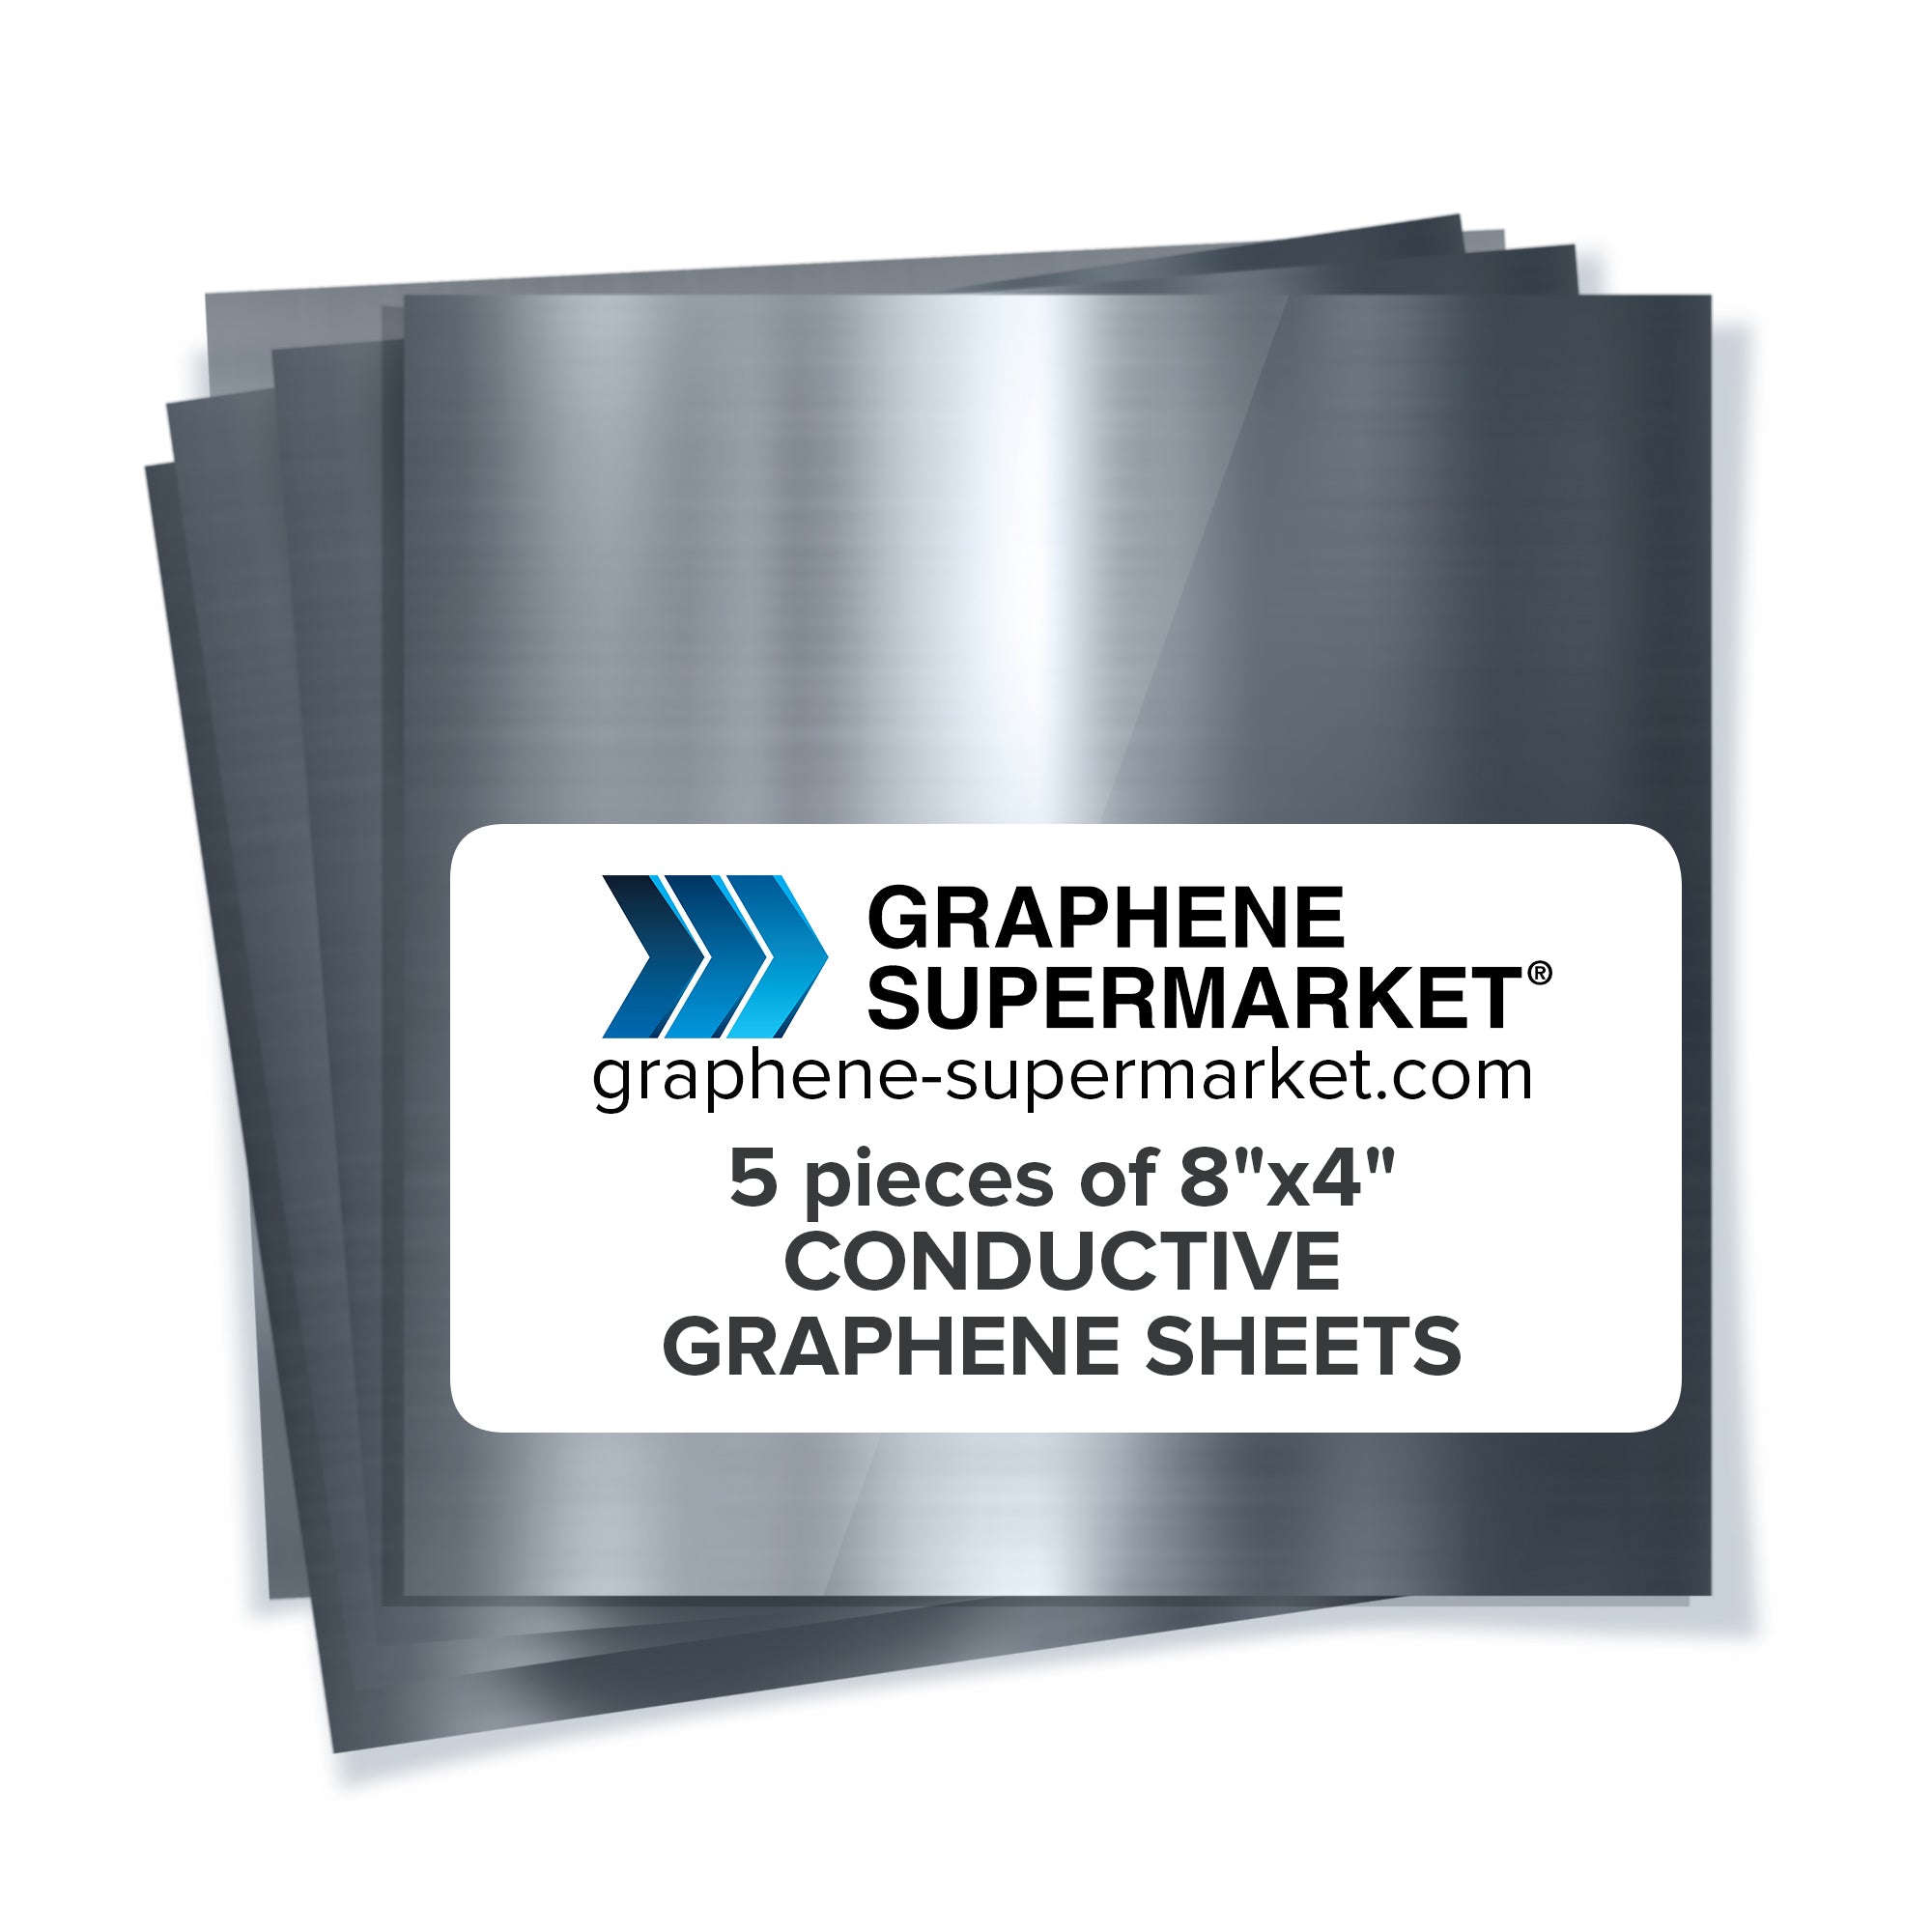 www.graphene-supermarket.com